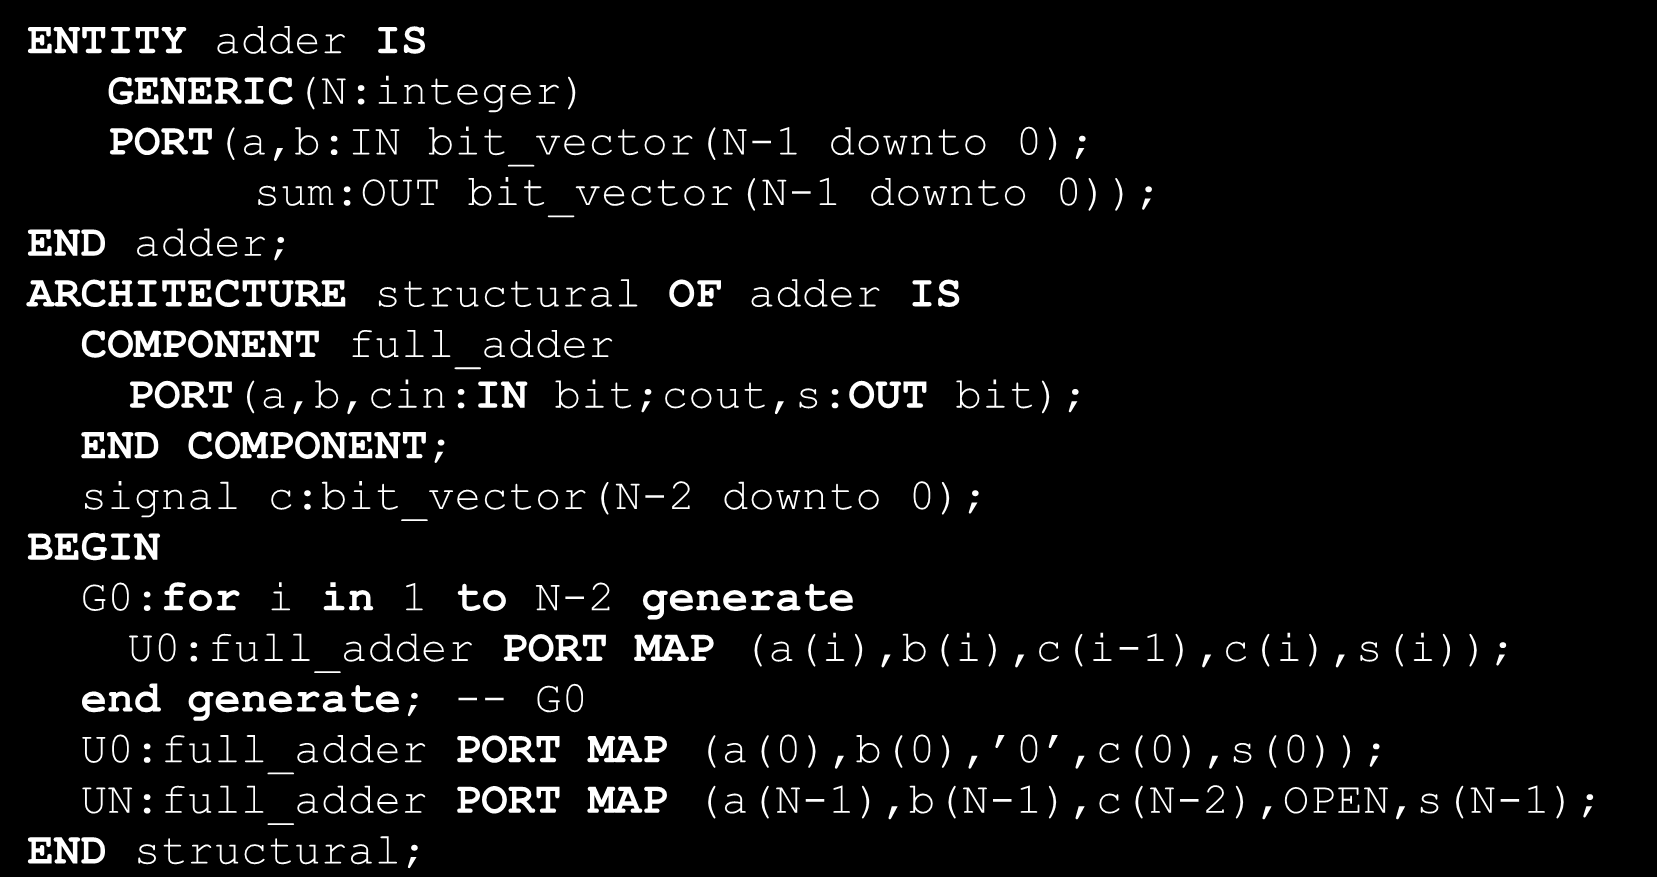 generate Generate-statement kopplar ihop många likadana element ENTITY adder IS GENERIC(N:integer) PORT(a,b:IN bit_vector(n- downto ); sum:out bit_vector(n- downto )); END adder; ARCHITECTURE